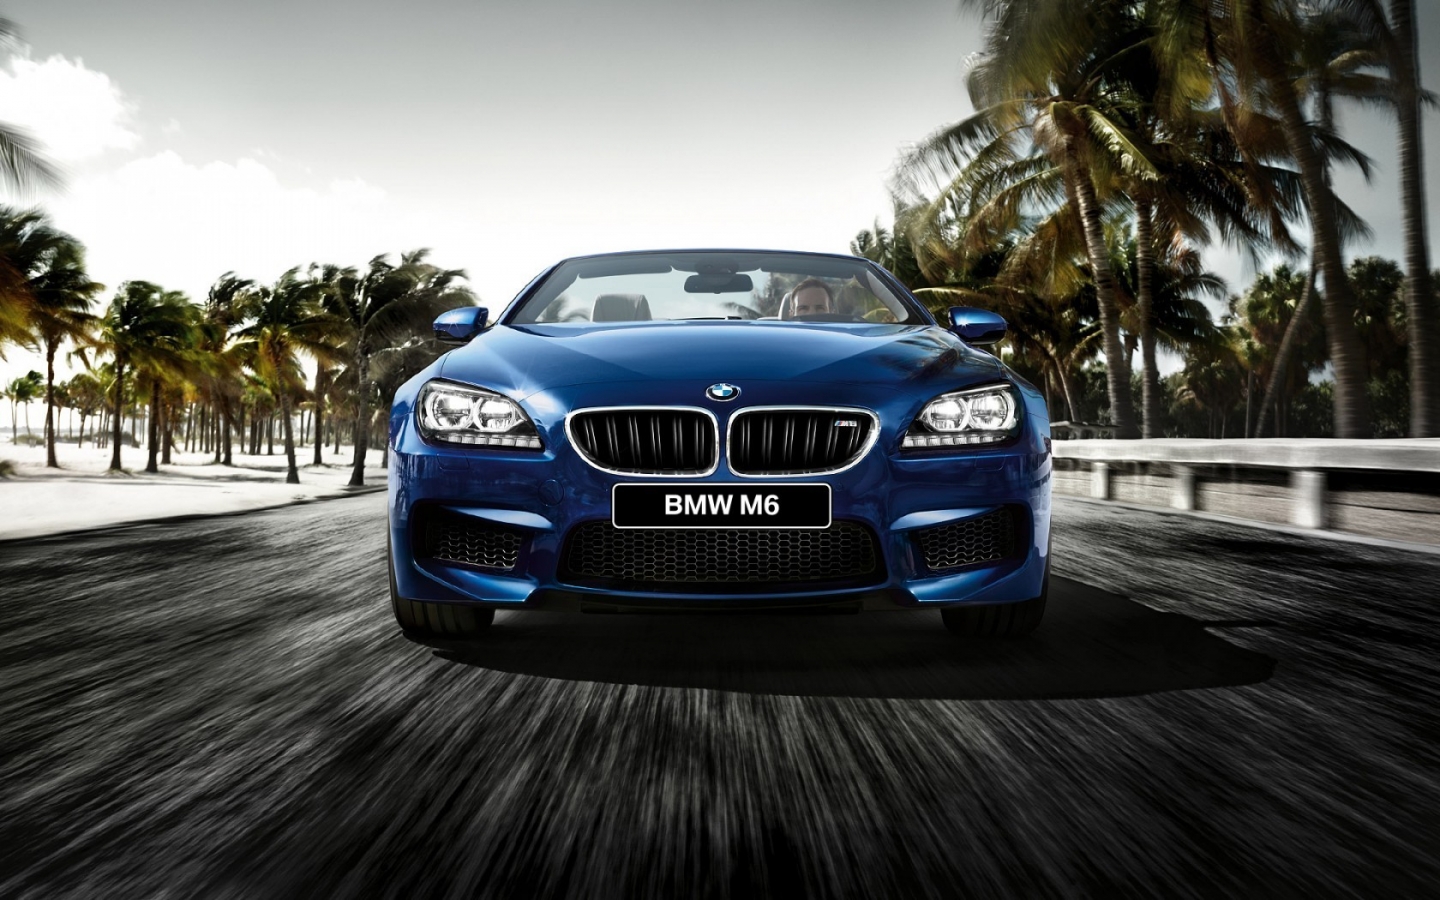 BMW M6 F12 Cabrio for 1440 x 900 widescreen resolution